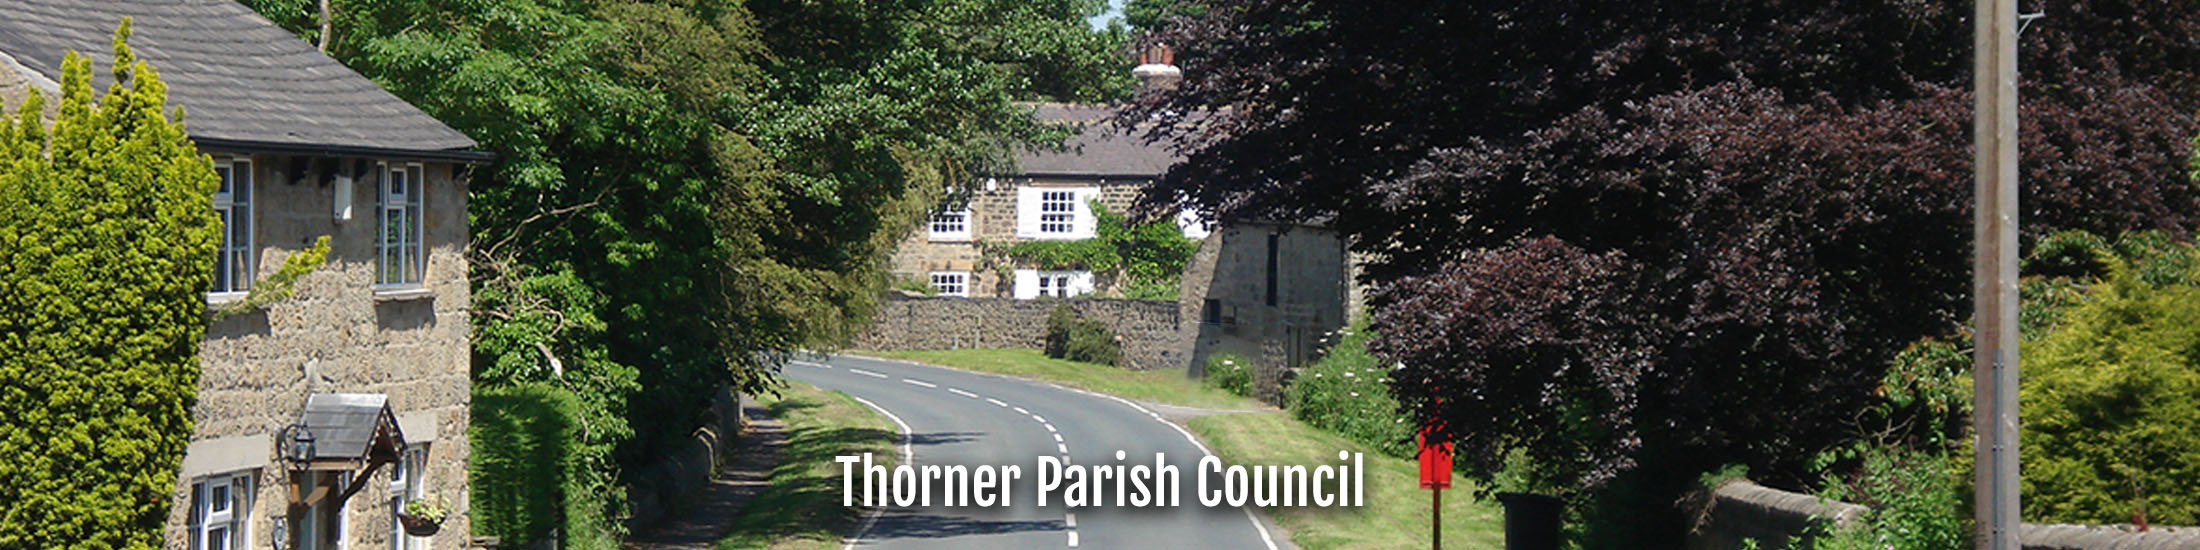 Header Image for Thorner Parish Council